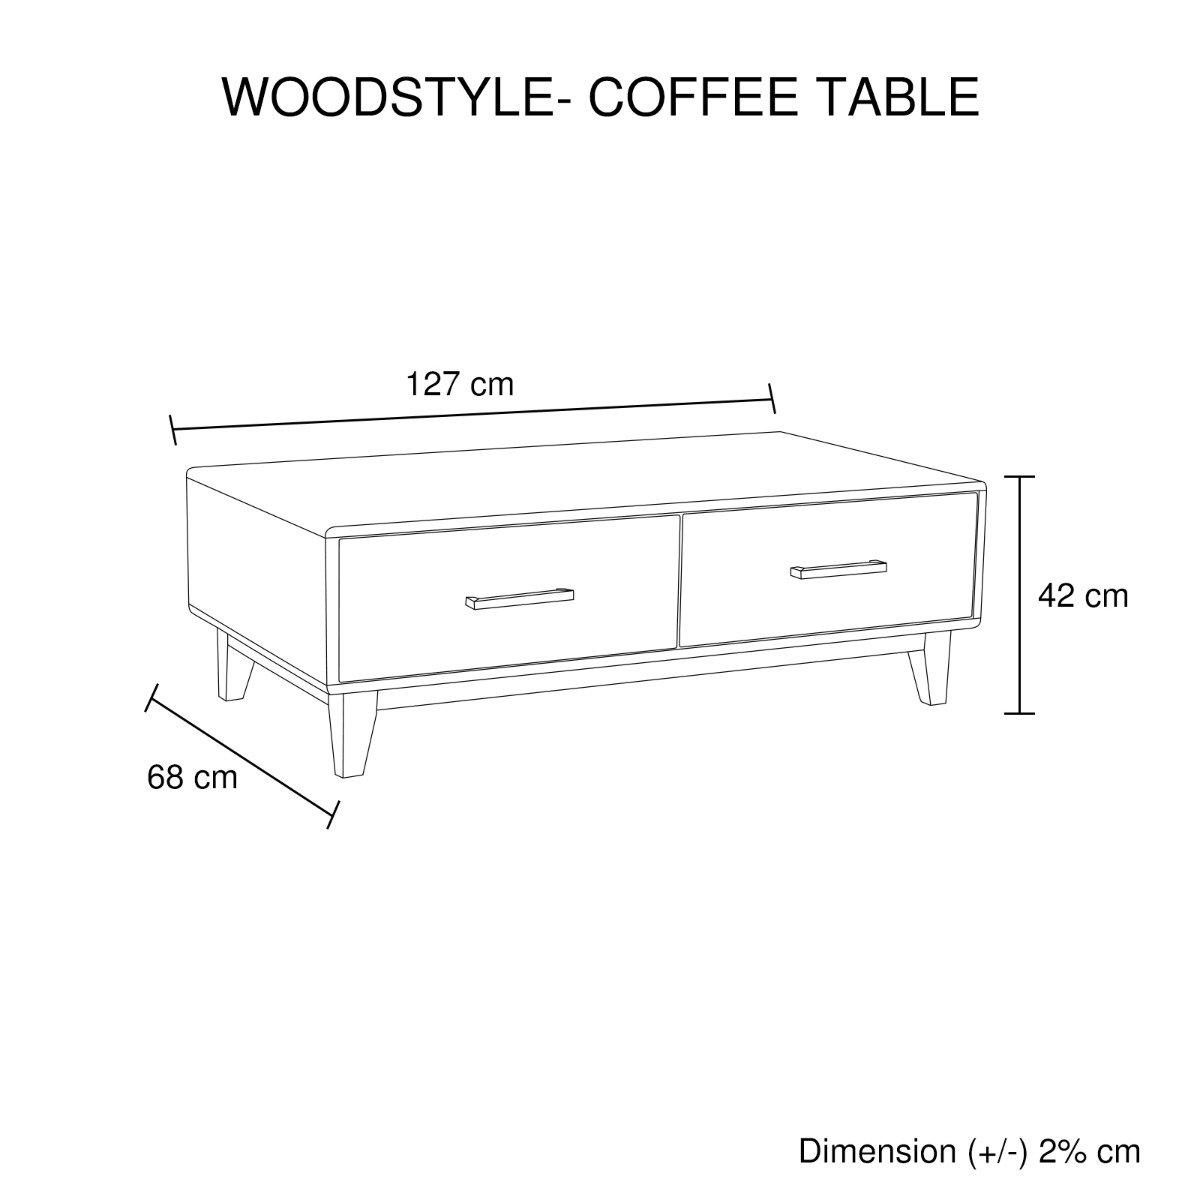 Bedroom Woodstyle Coffee Table